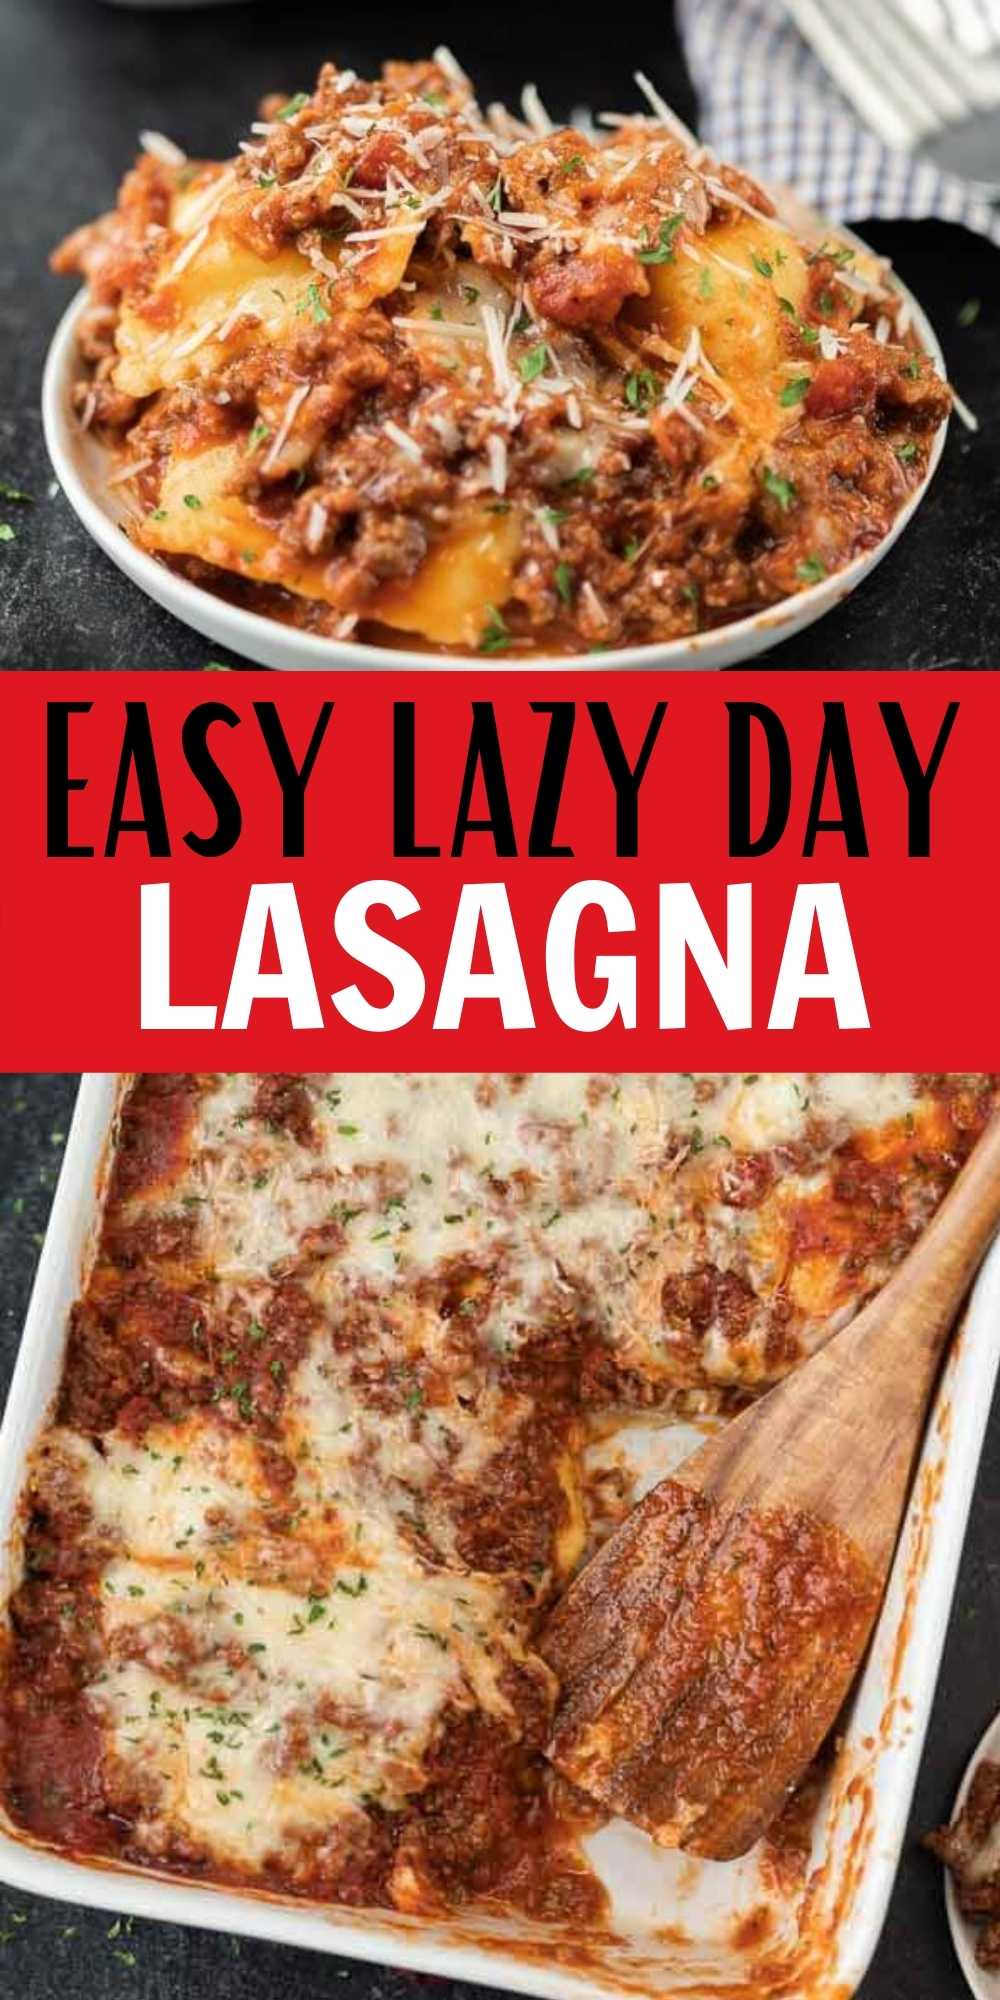 Easy Lasagna recipe -The best lasagna recipe simple to make